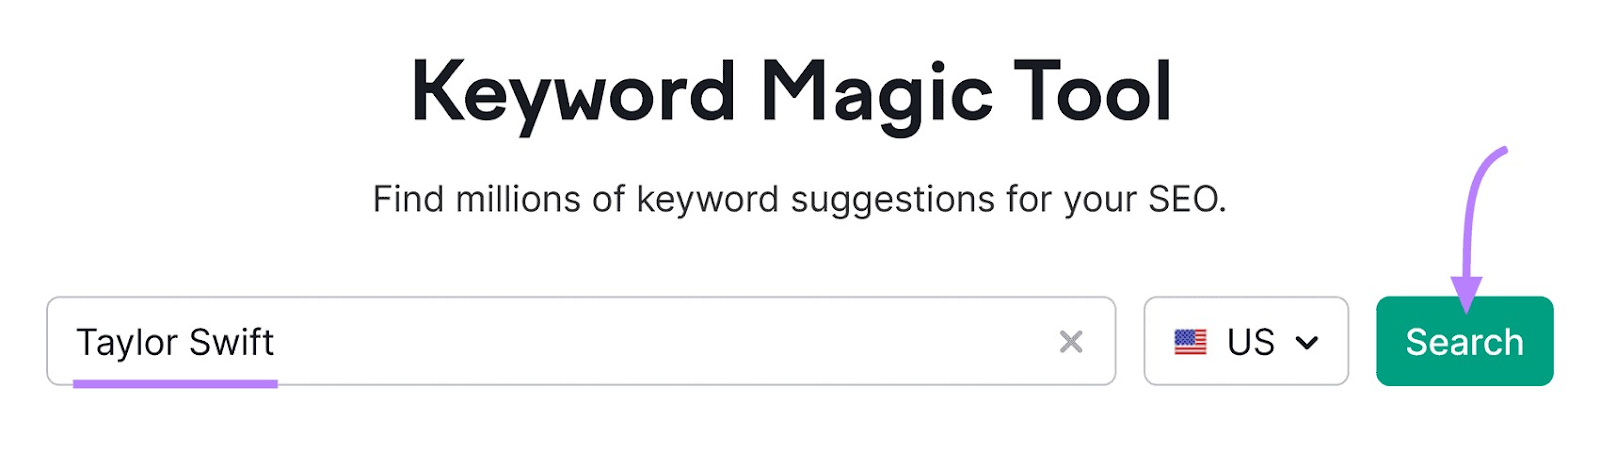 “Taylor Swift” entered in Keyword Magic Tool search bar